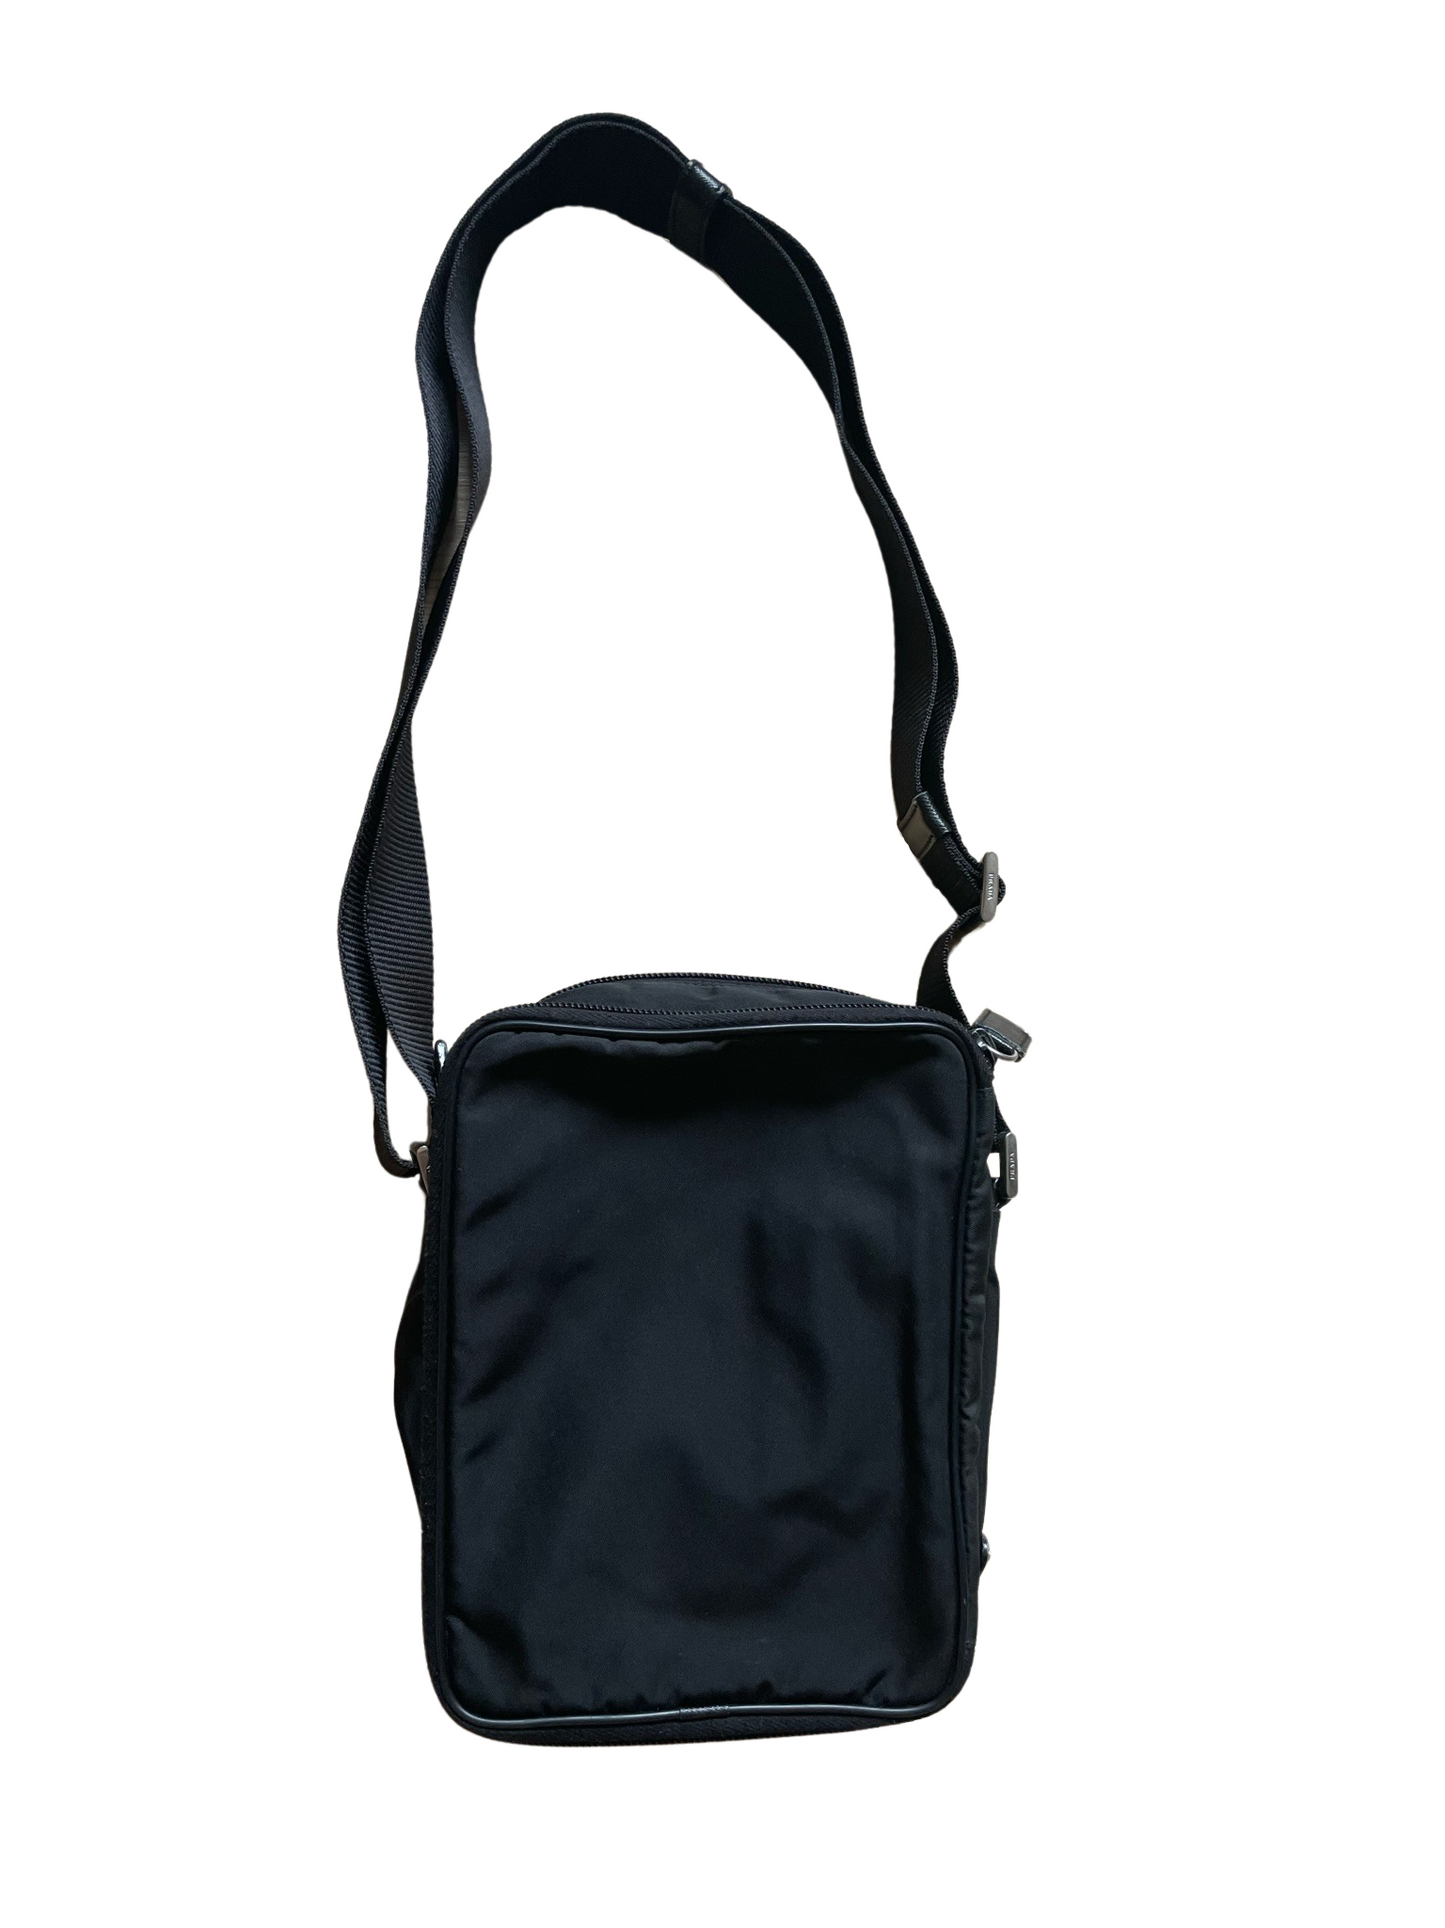 Prada Black Nylon & Leather Shoulder Bag